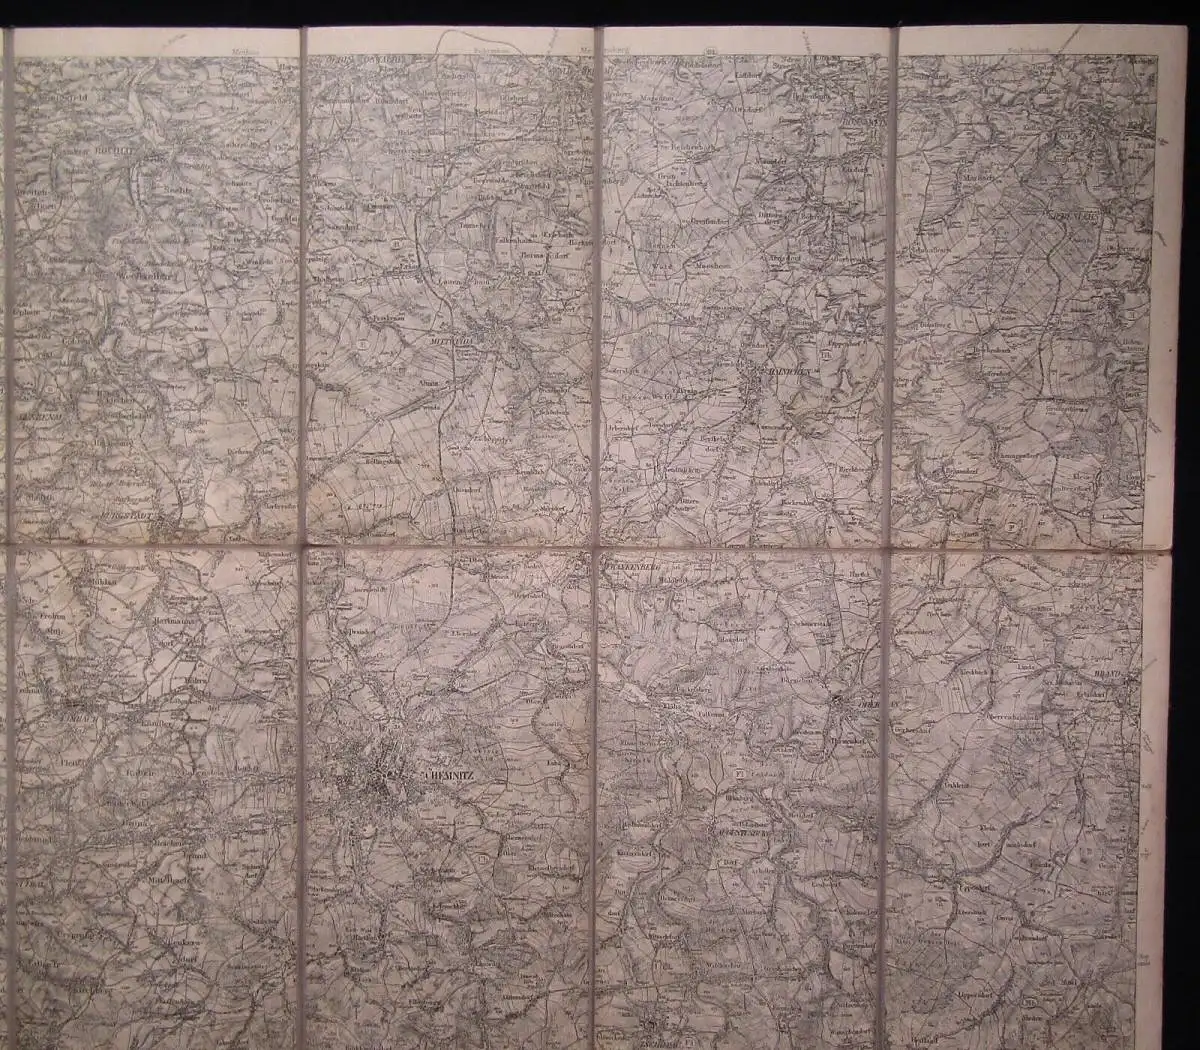 Garnisionumgebungskarte Chemnitz Maßstab 1:100 000 um 1910 59x56 cm